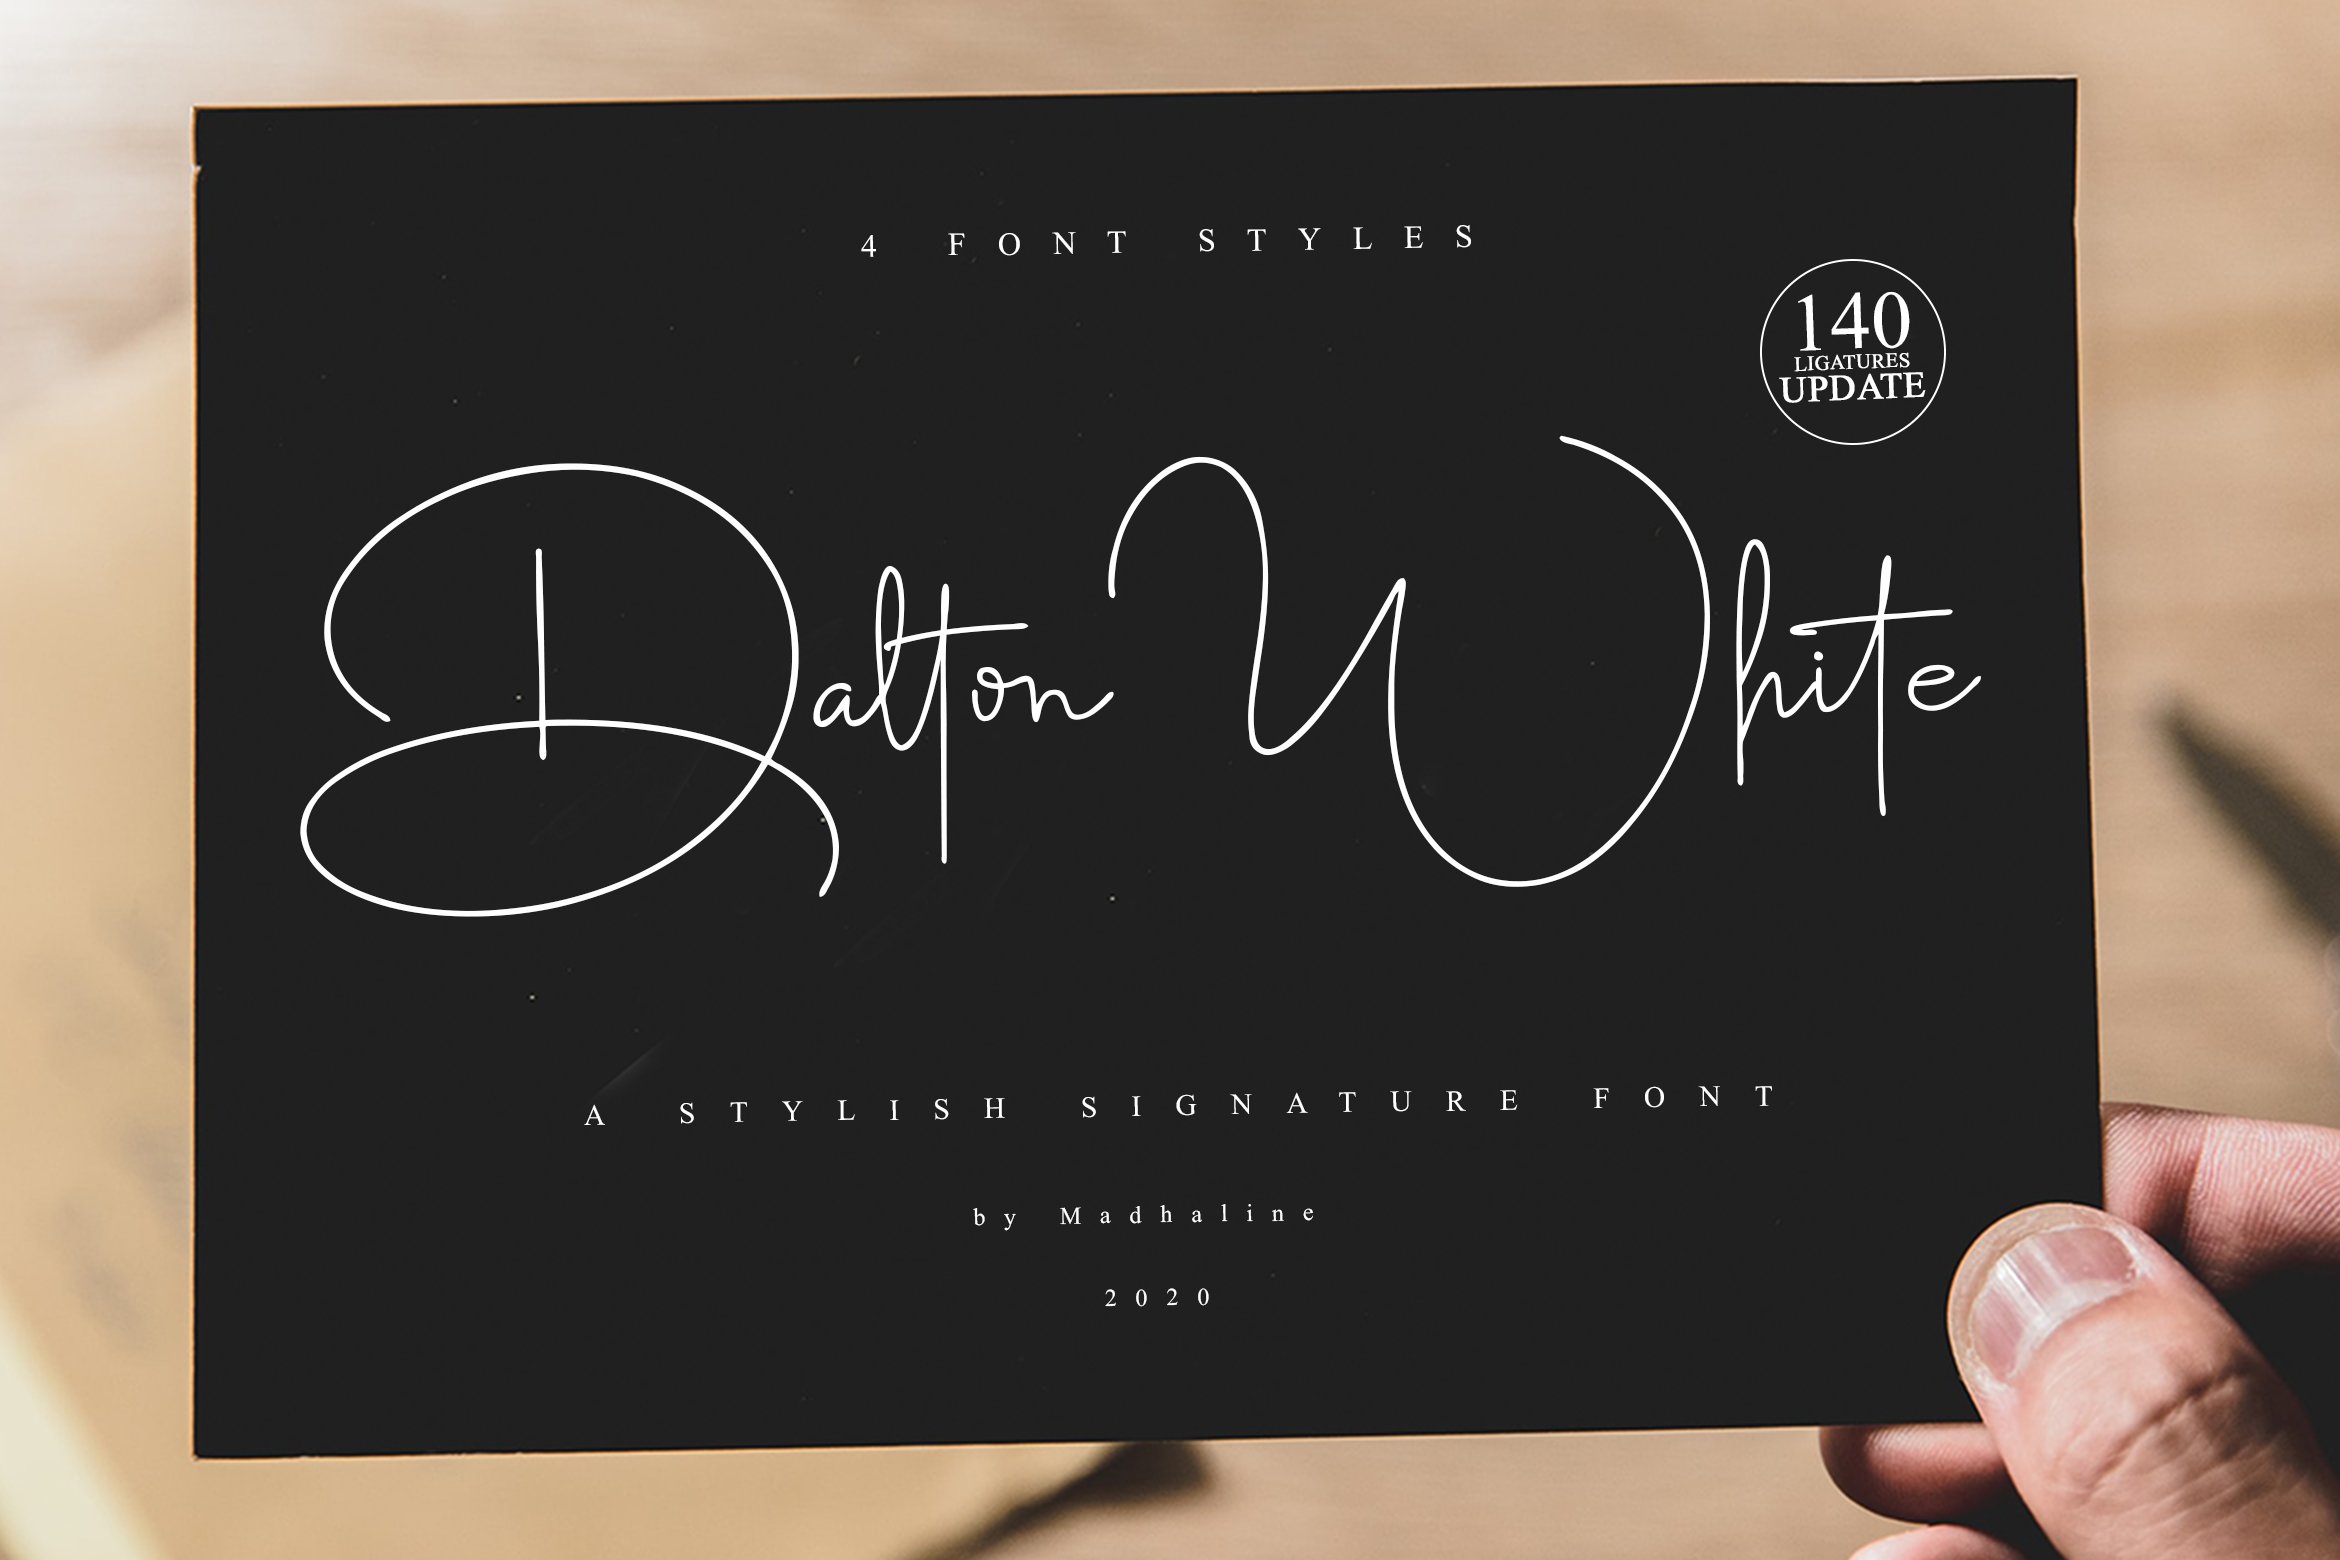 Dalton White 4 Font Style cover image.